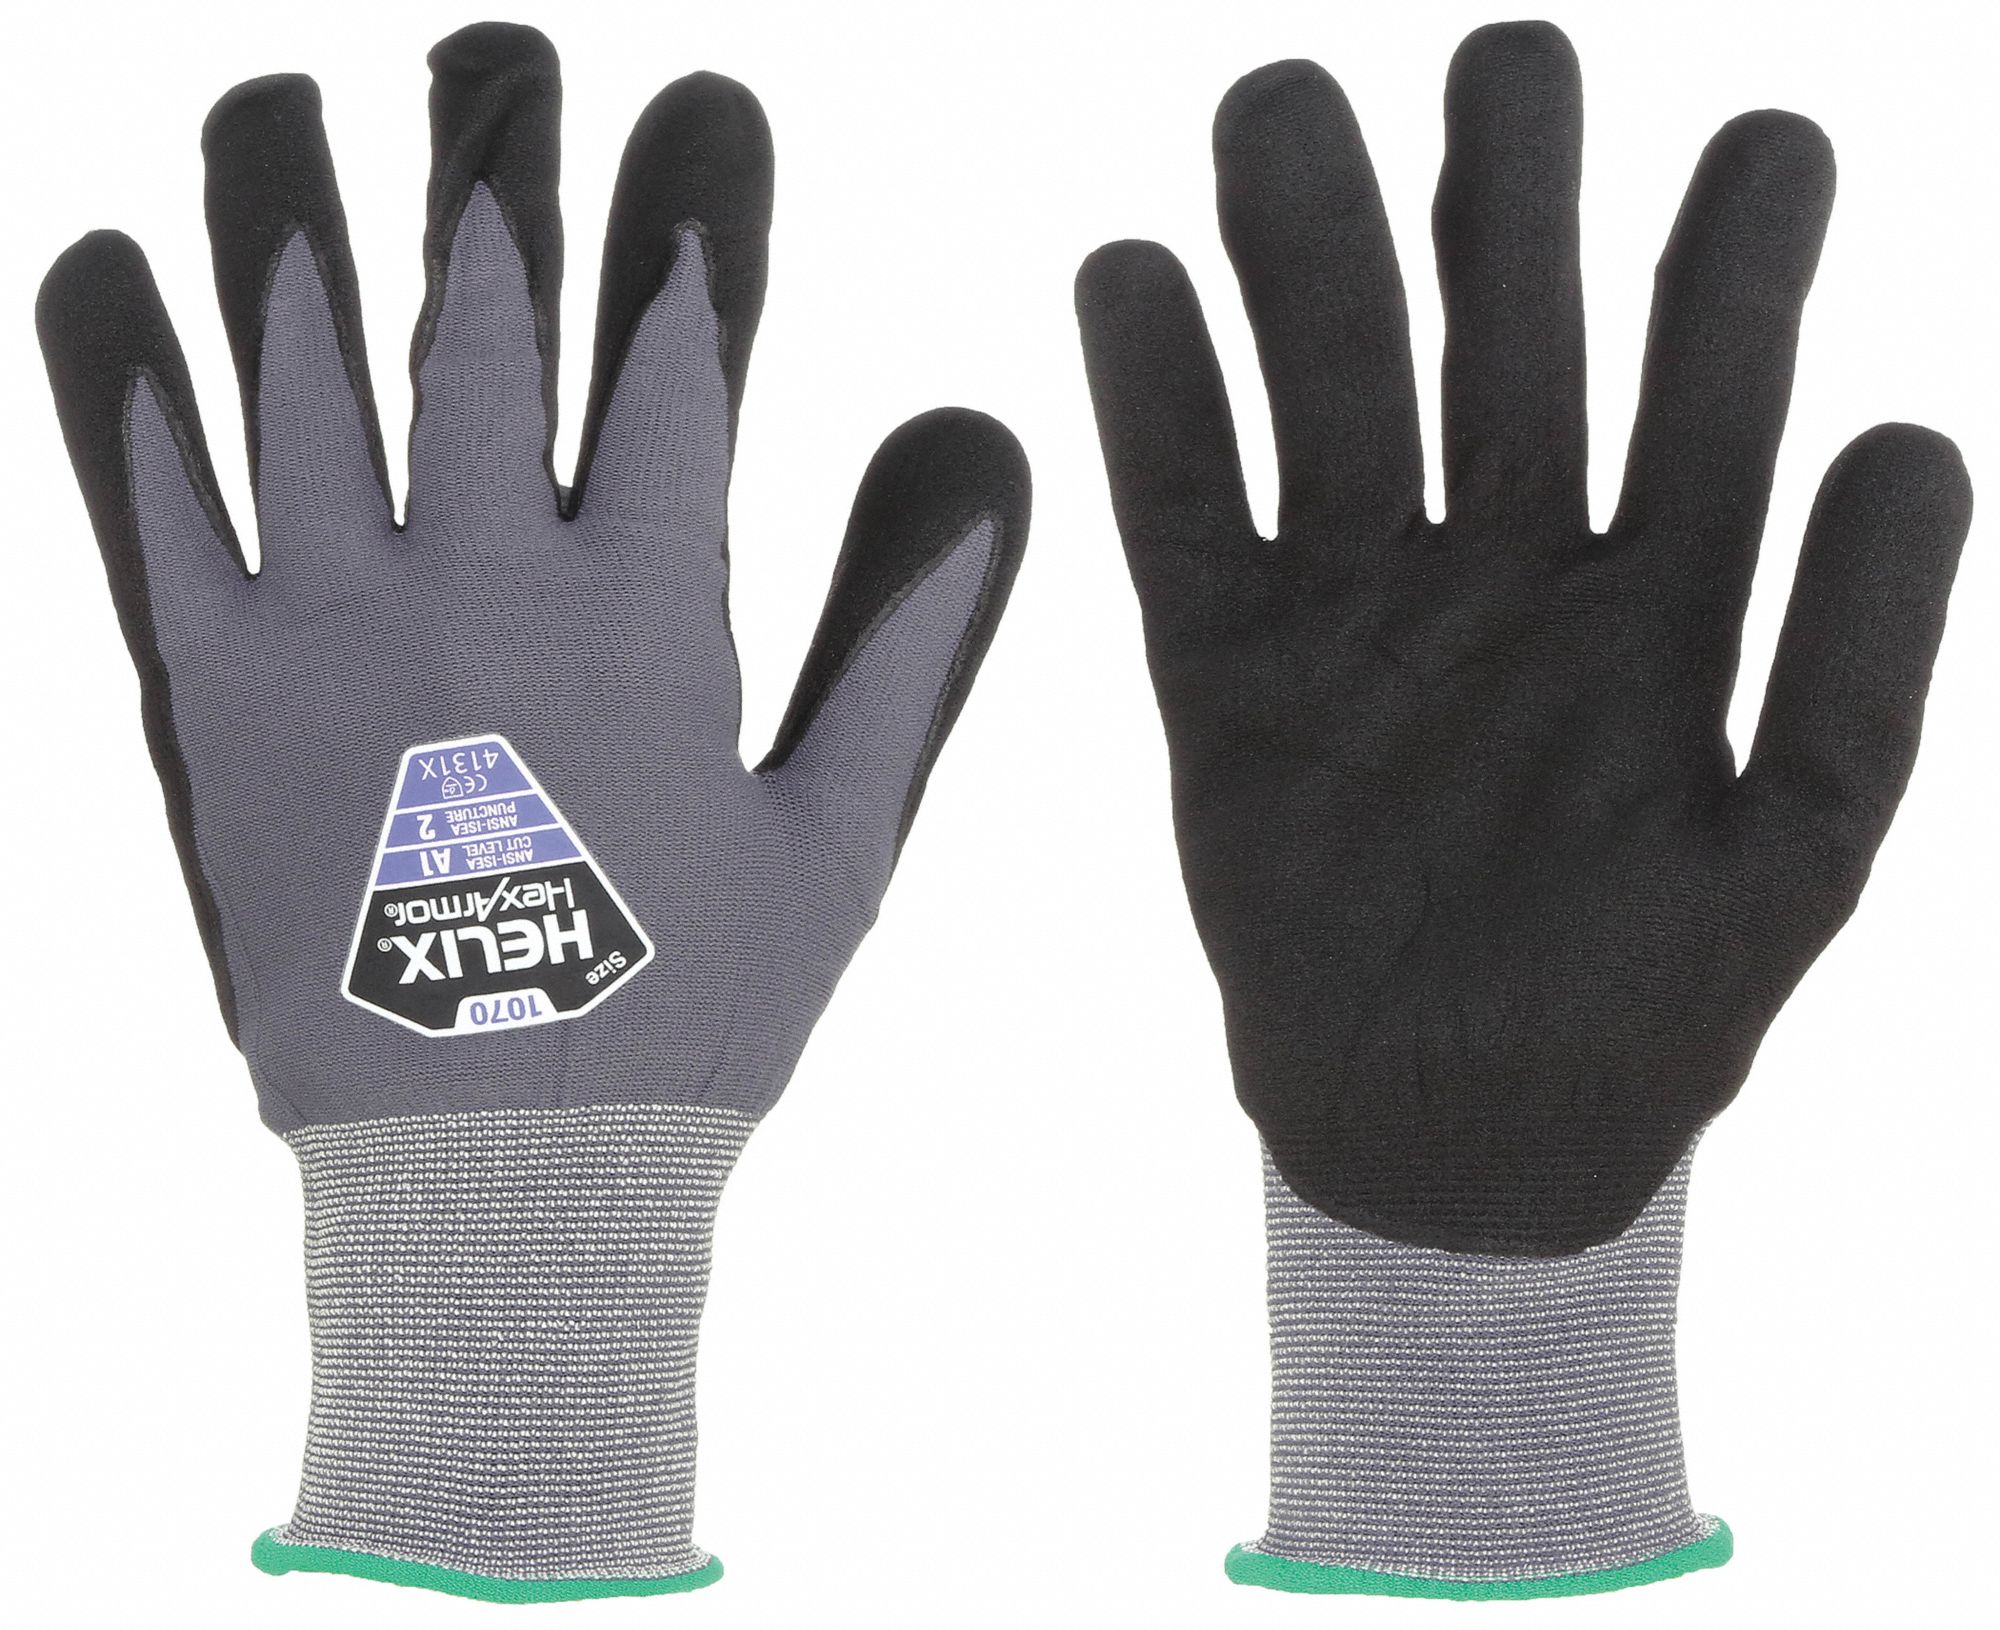 15G Grey Nitrile Coated Seamless Gloves